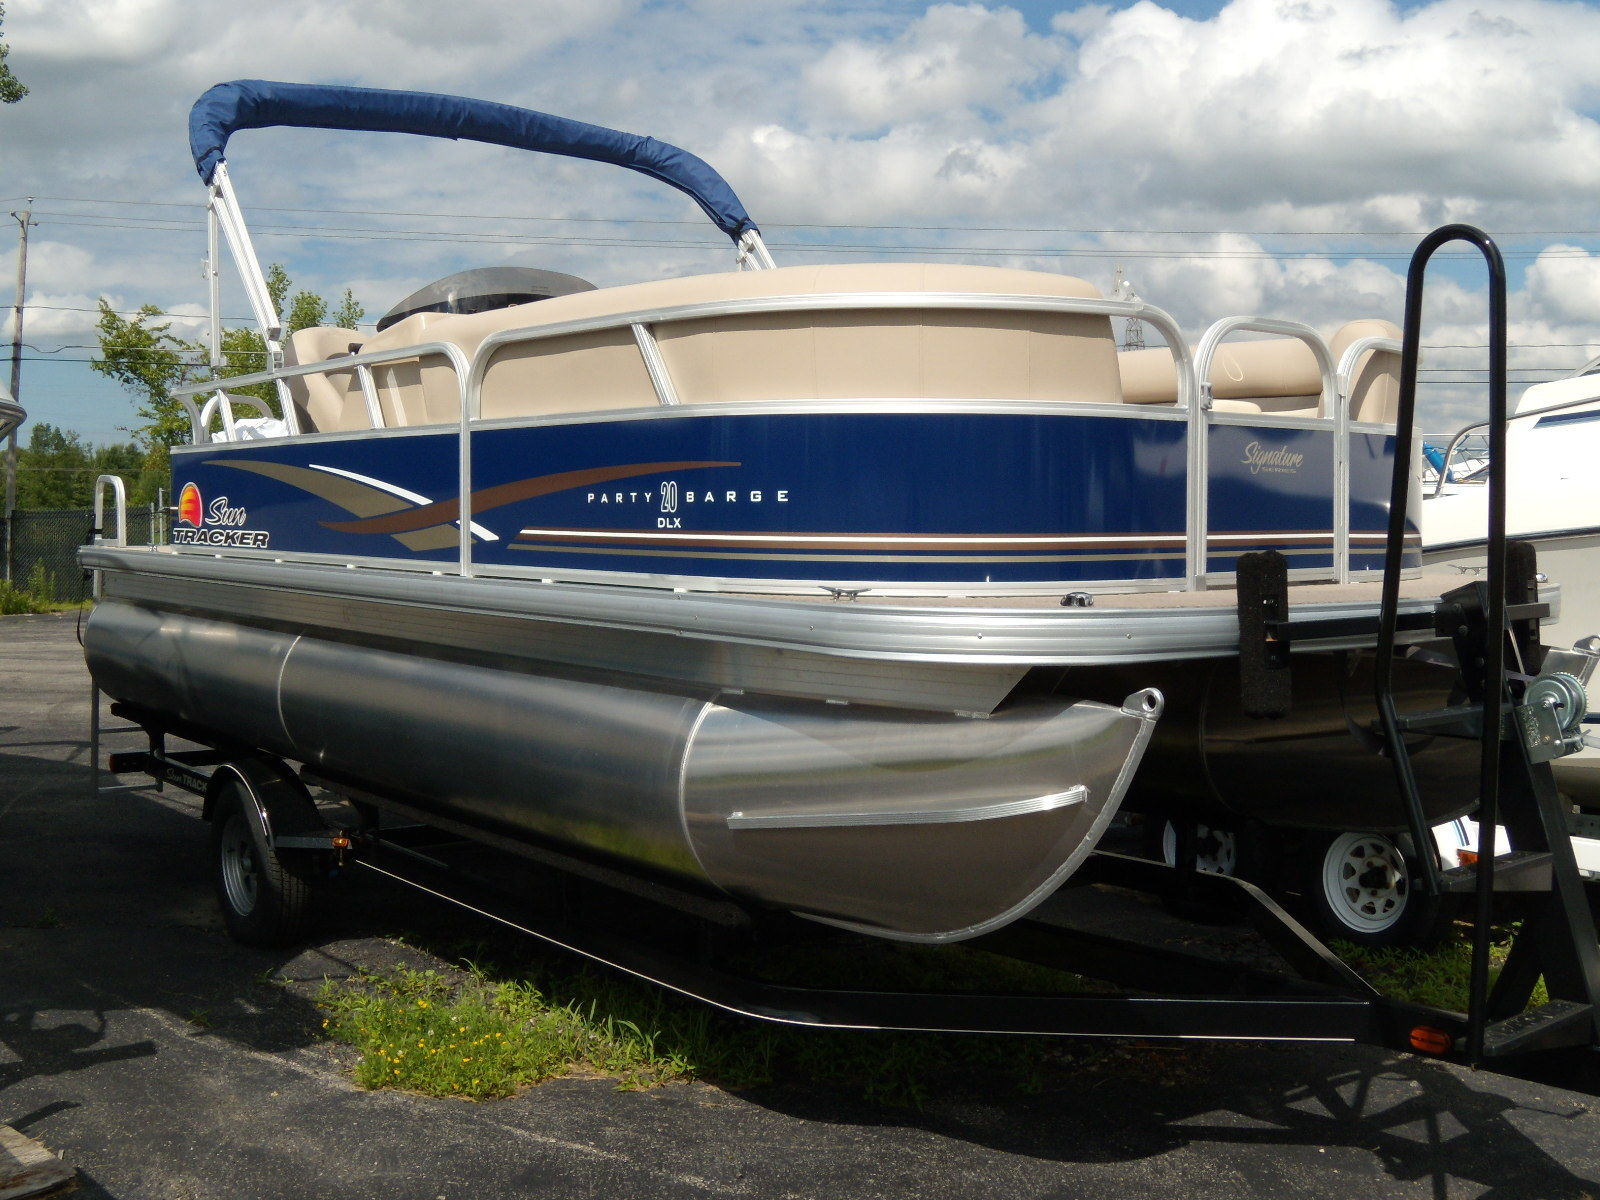 NEW 2014 SunTracker Party Barge 20 Signature Pontoon Boat 